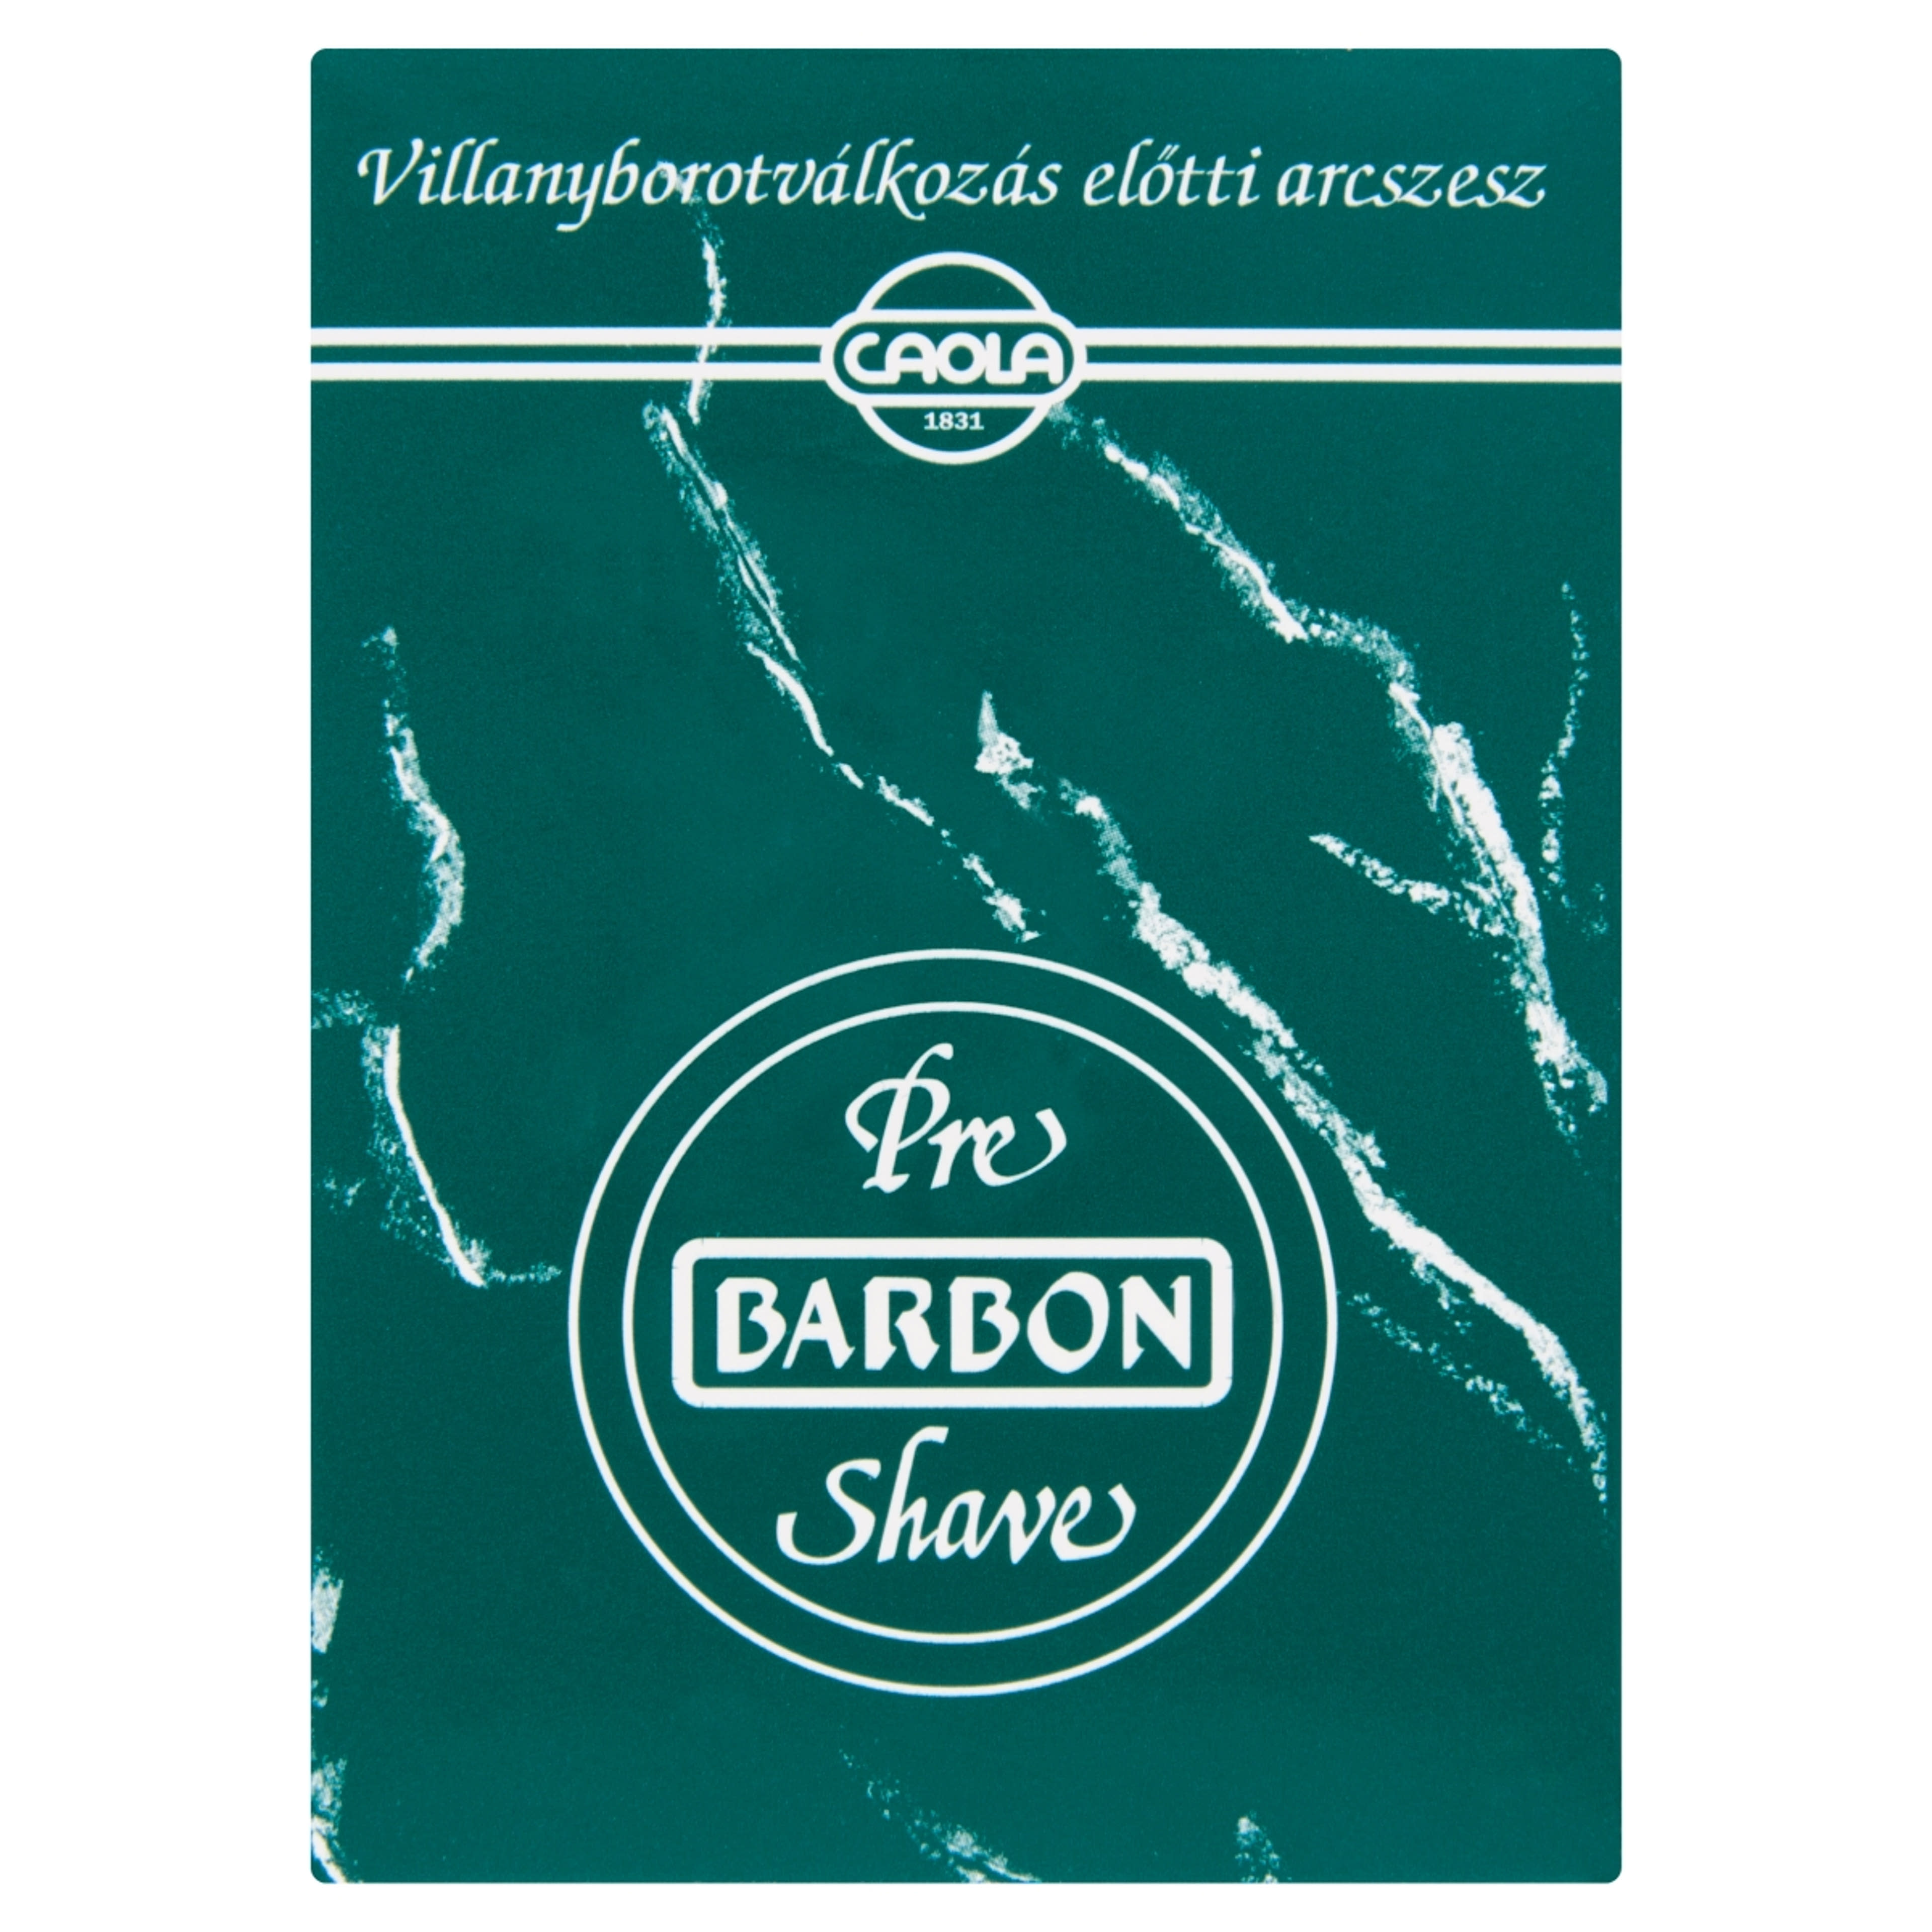 Barbon pre shave - 100 ml